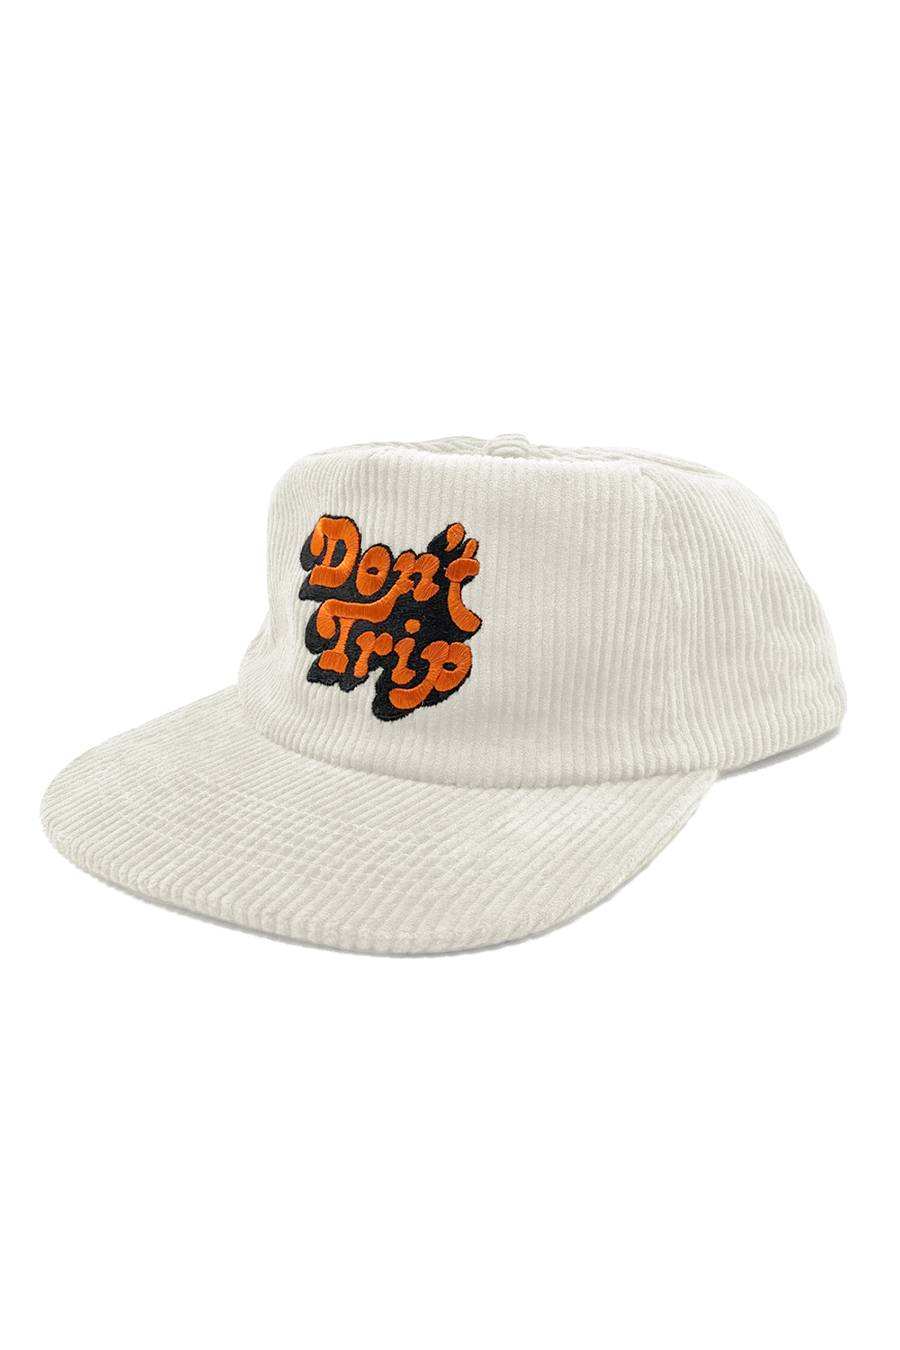 Don't Trip Corduroy Snapback Hat | Chalk/Orange - Main Image Number 1 of 1